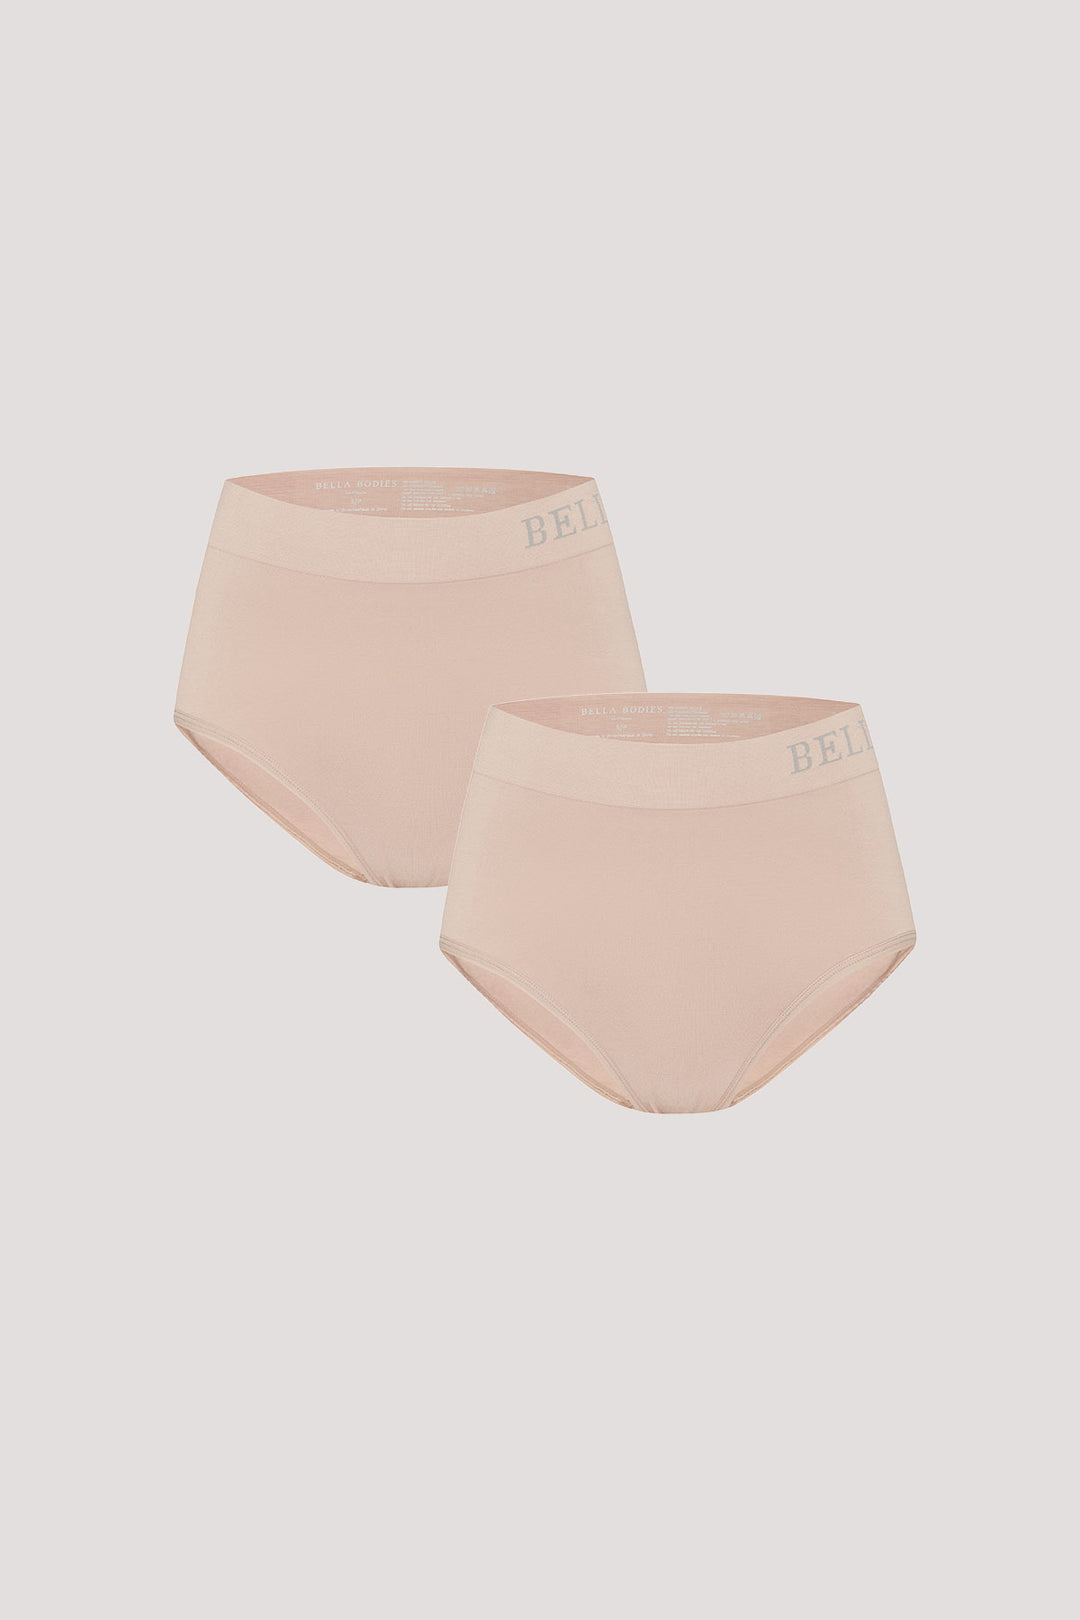 Women's Breathable Bamboo High Waist Underwear 2 pack | Bella Bodies Australia  | Sand and Sand